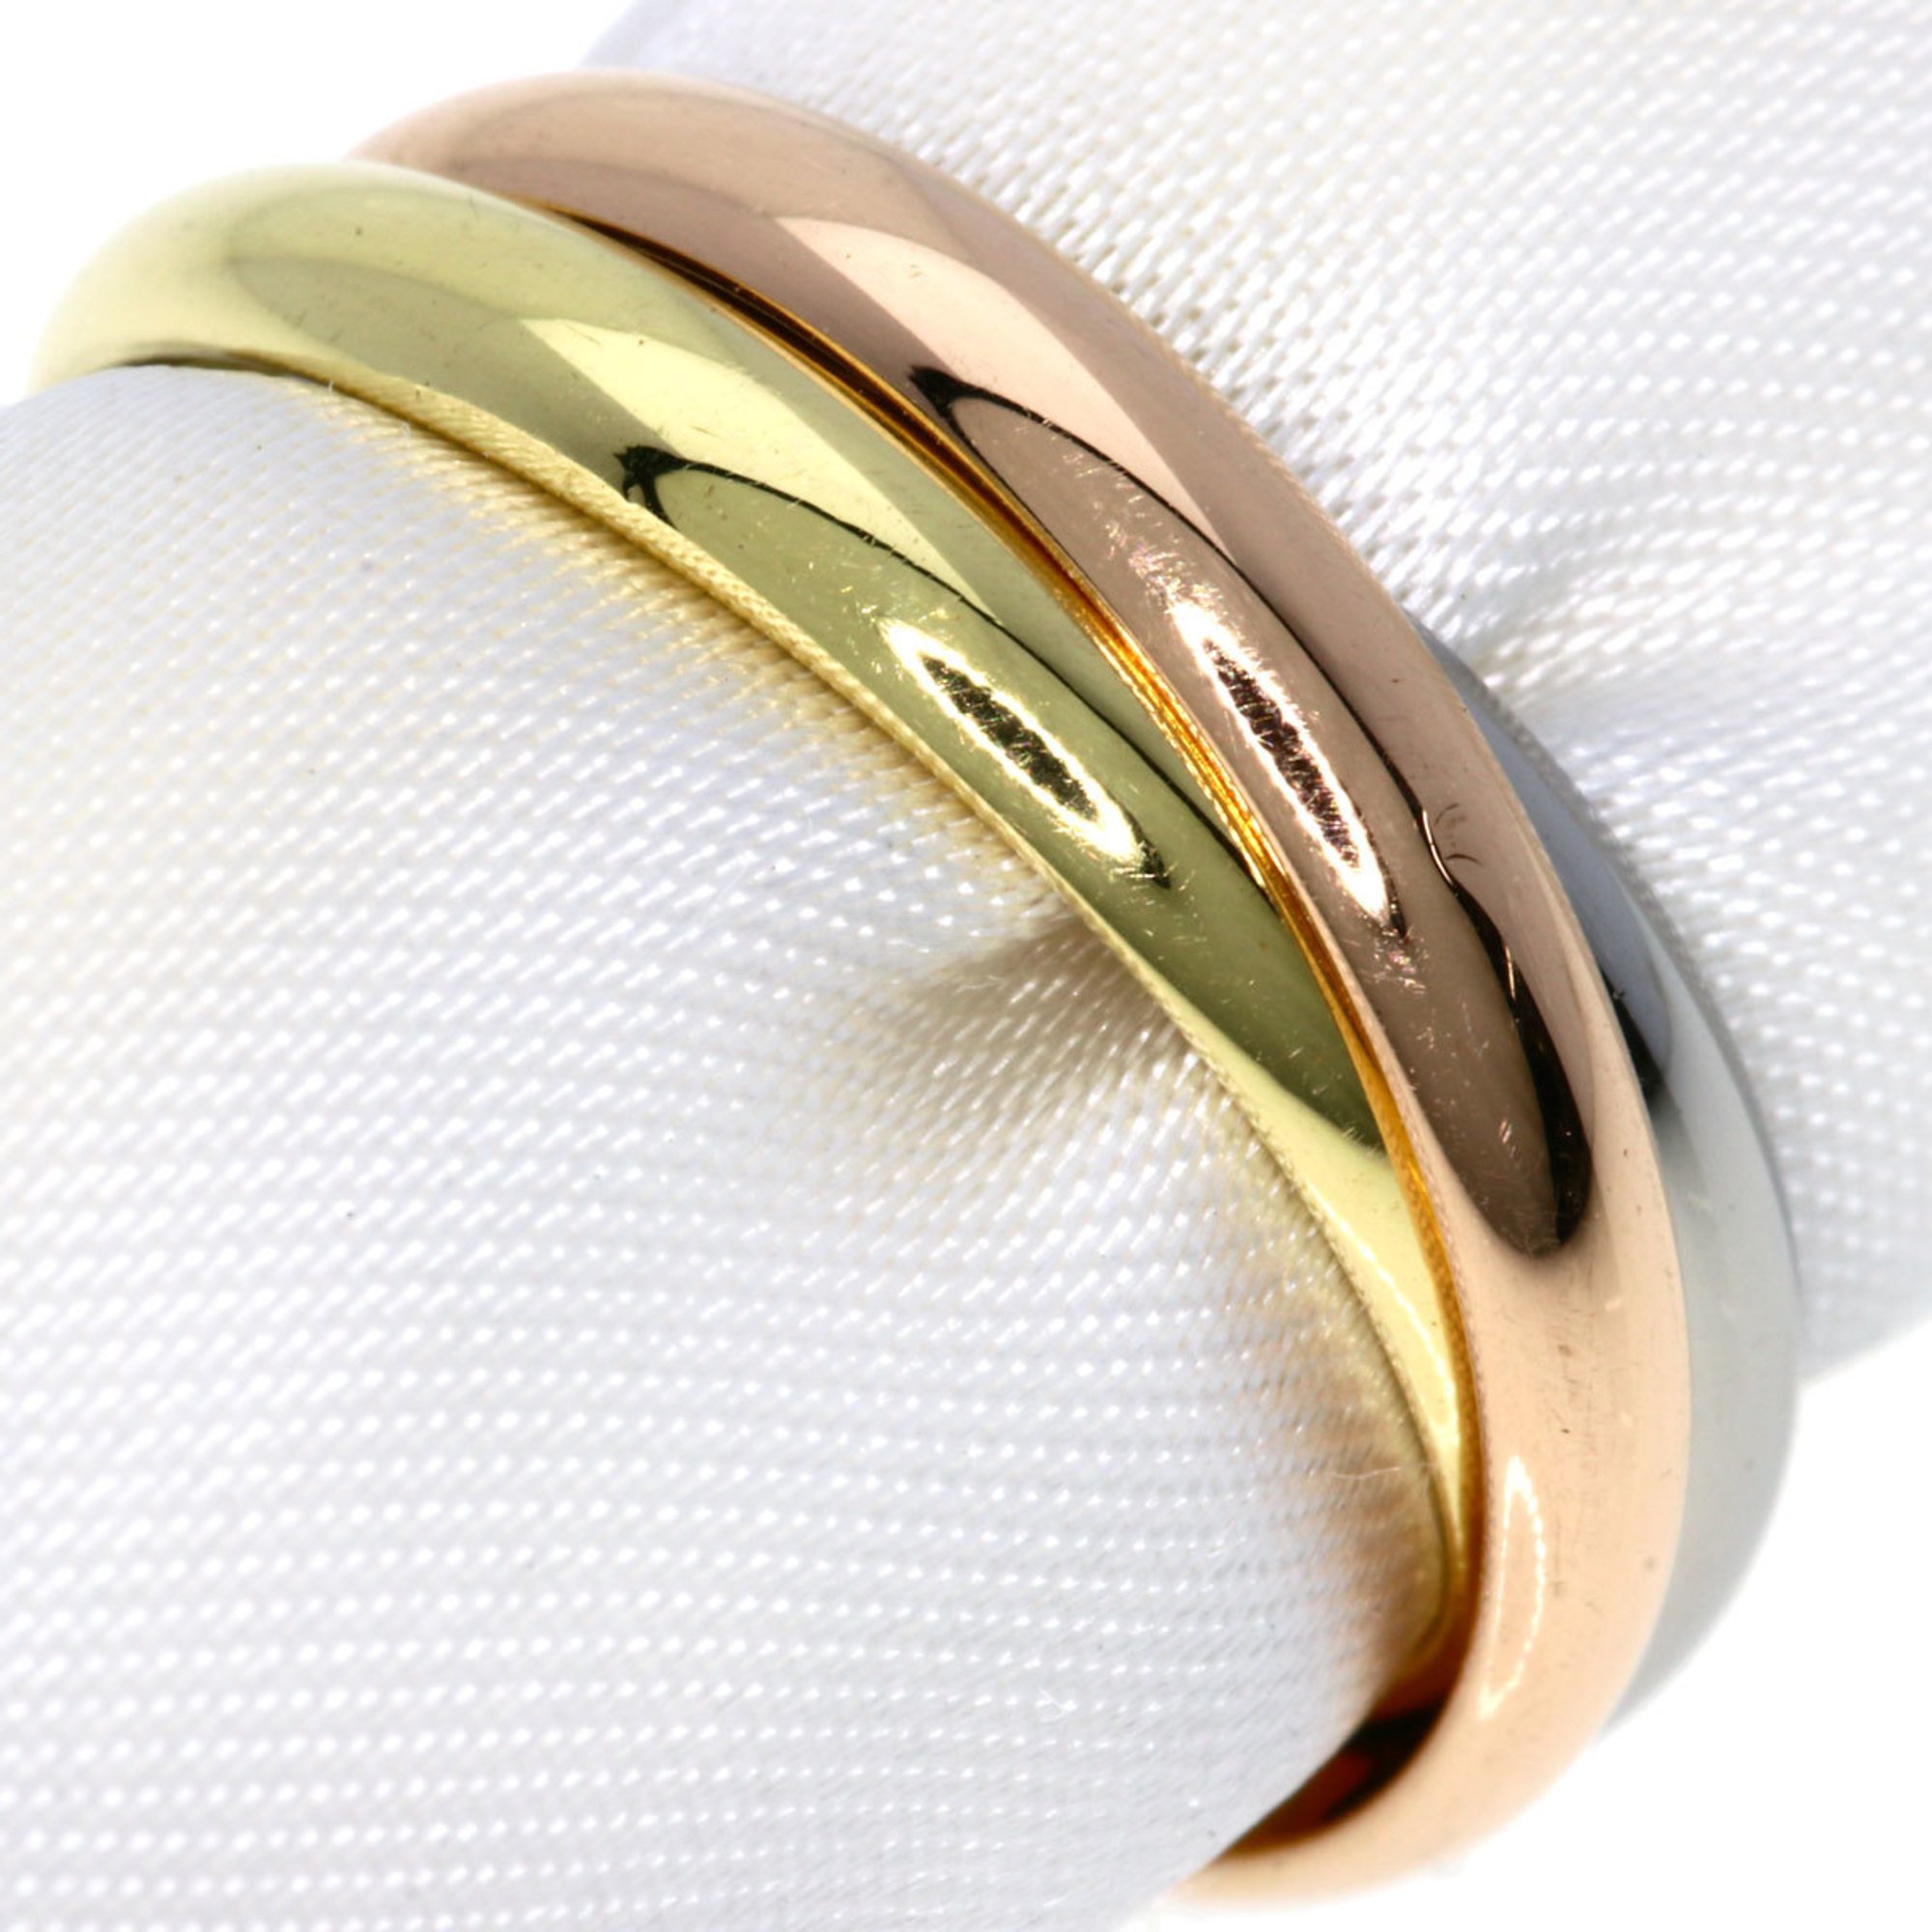 Cartier Trinity SM #49 Ring, K18 Yellow Gold, K18WG, K18PG, Women's